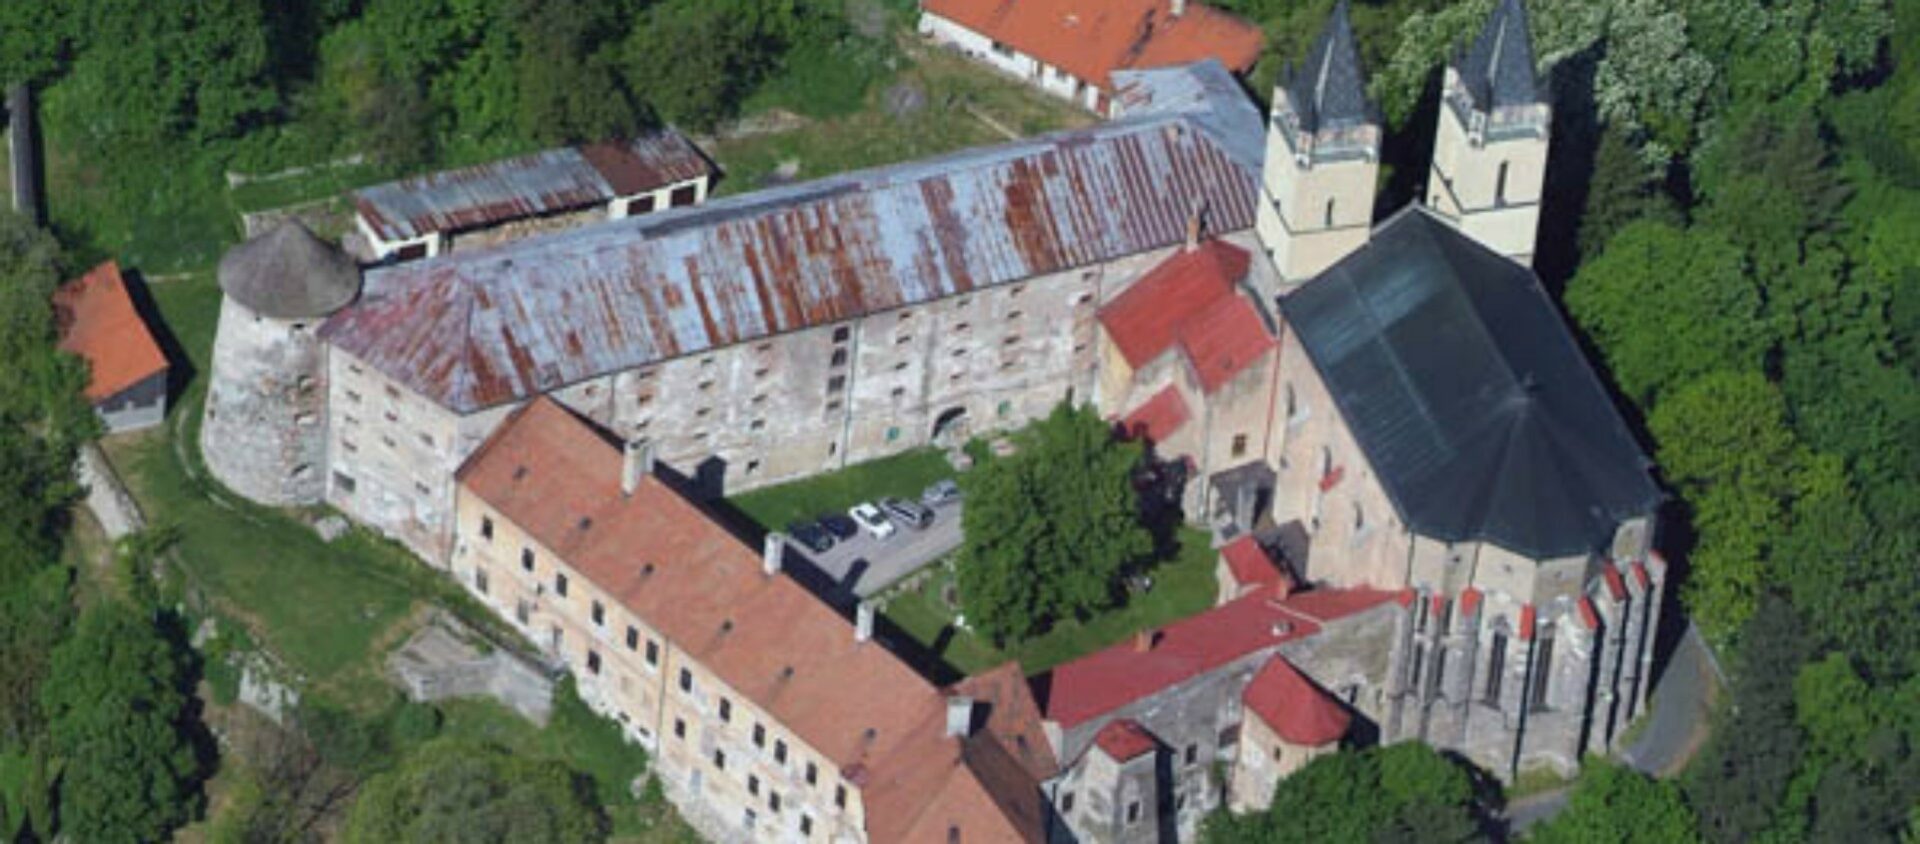 Monastère bénédictin fortifié de Hronsky Benadik | Civertan widkipedia commons CC BY-SA 3.0

